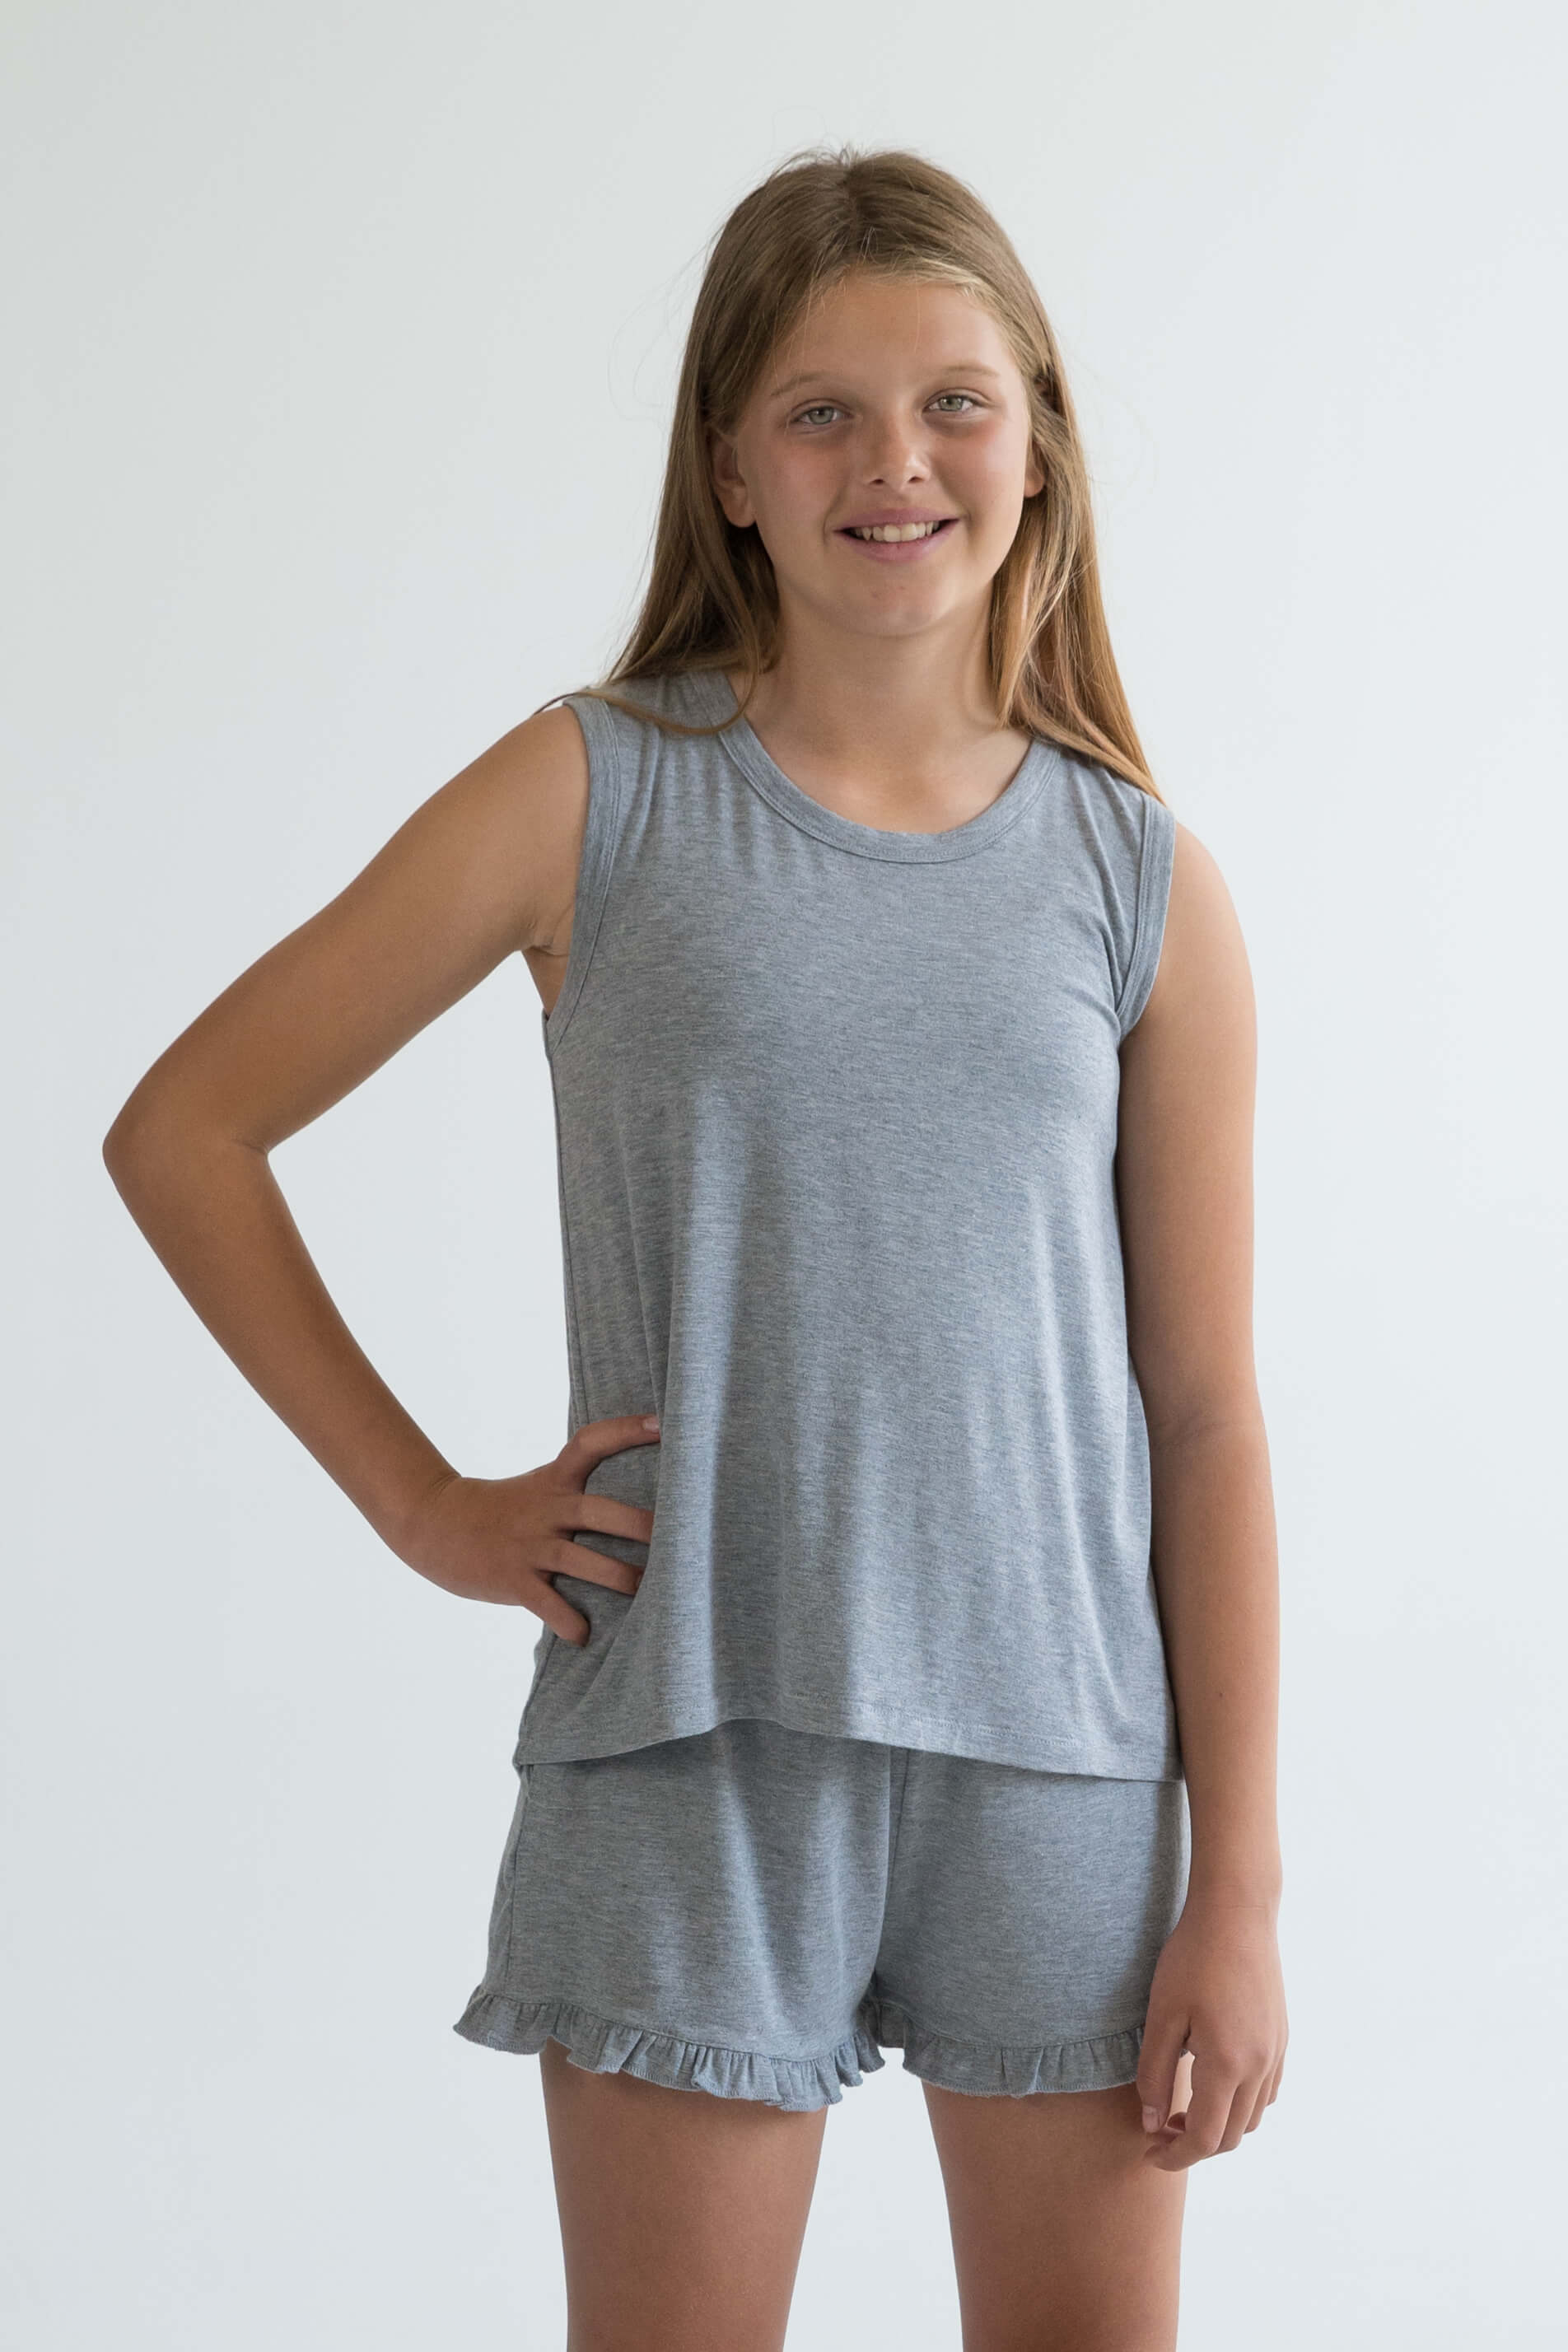 grey teen girls bamboo pyjamas shorts elastic waist, pockets and drawstring by Love Haidee Australia front